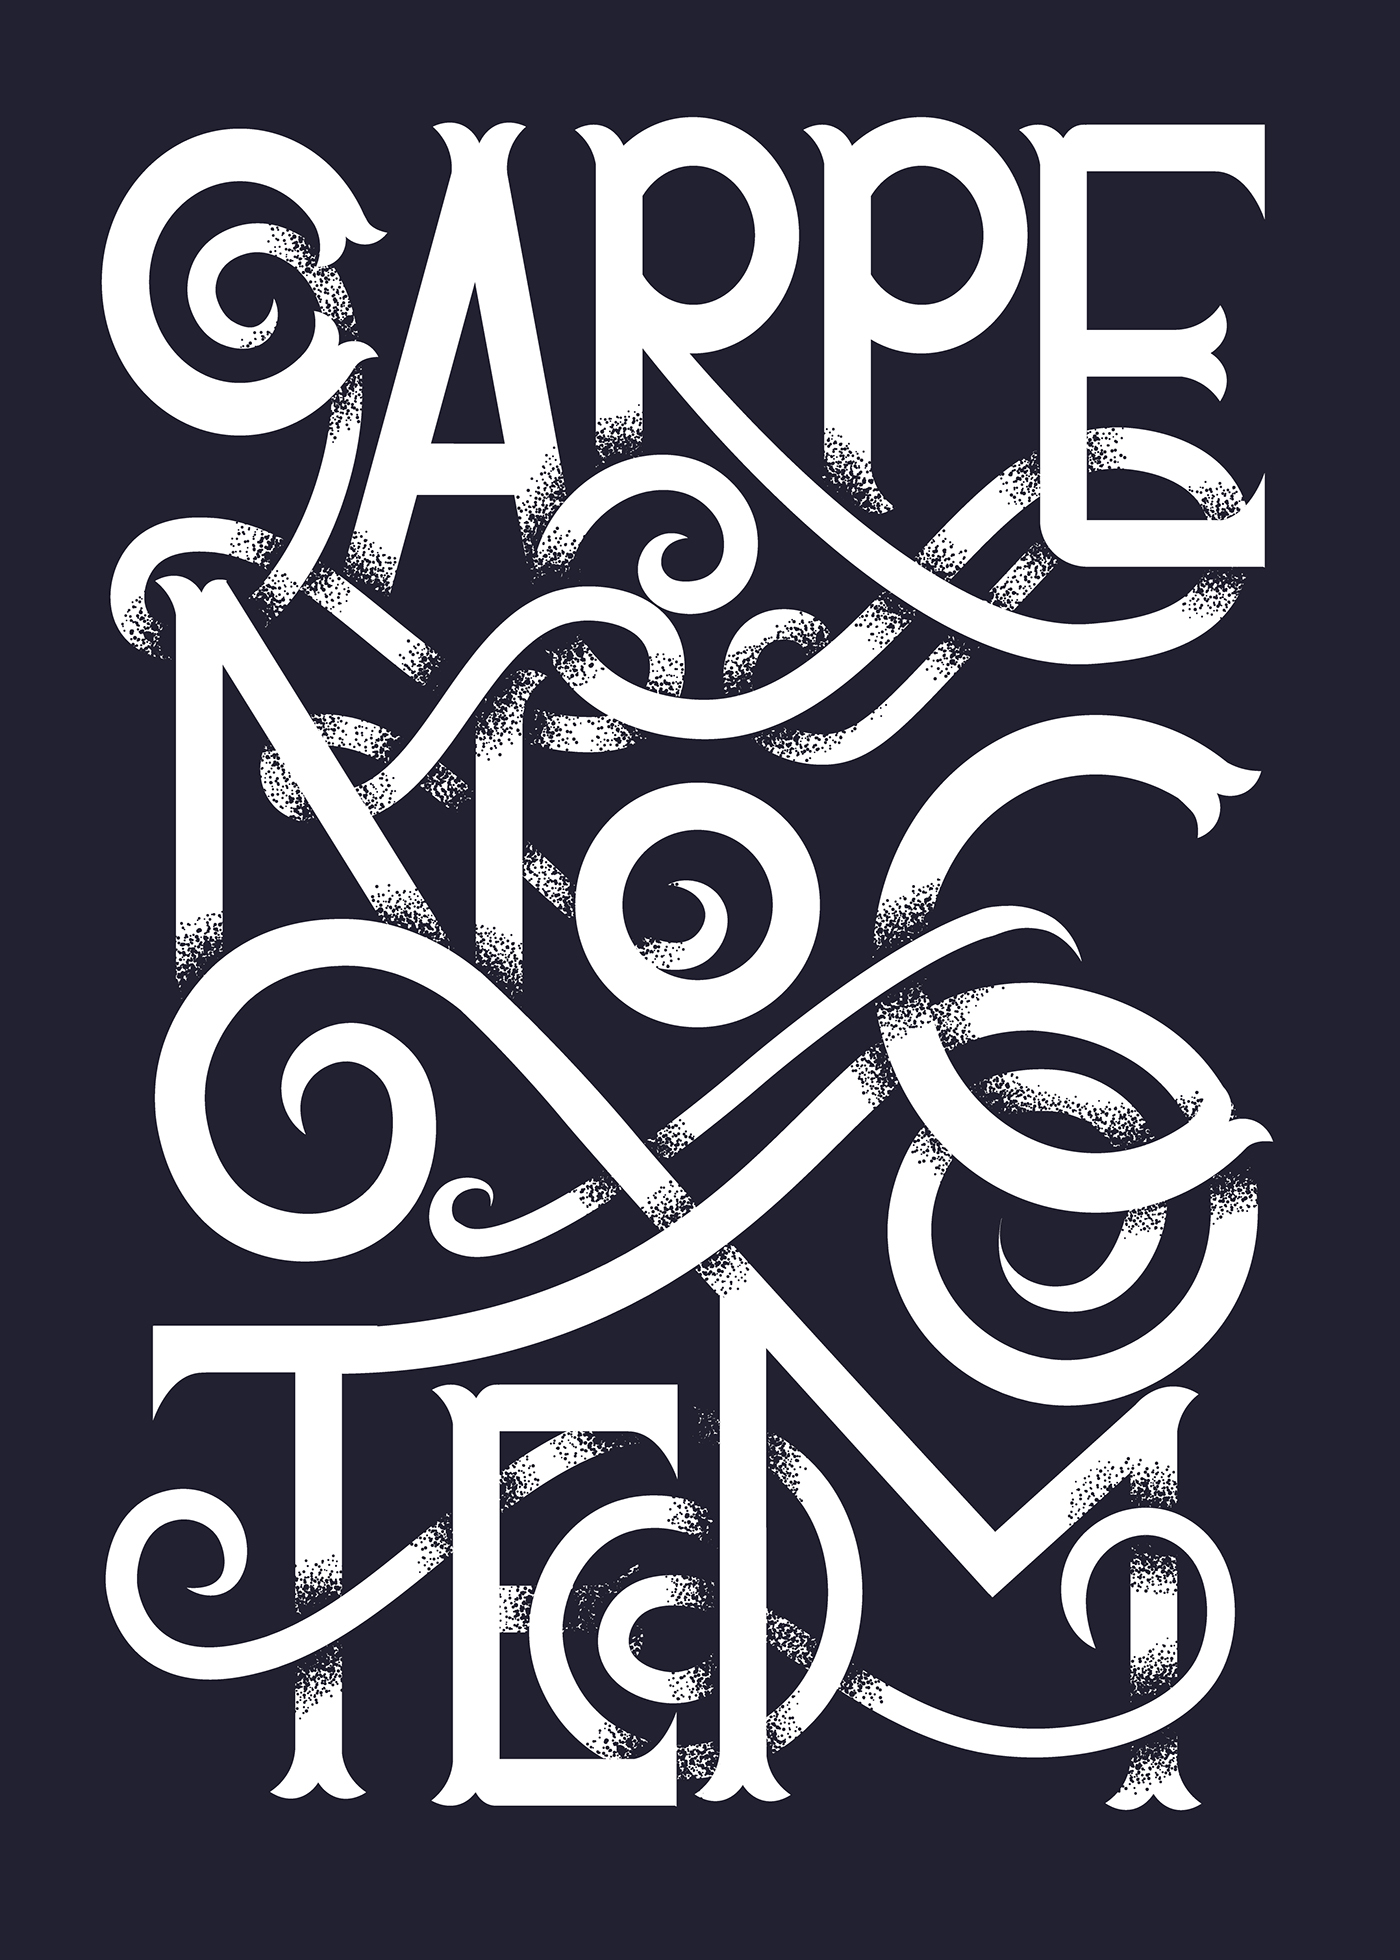 poster typographic type Latin quote Carpe noctem inspiration Script lettering vintage